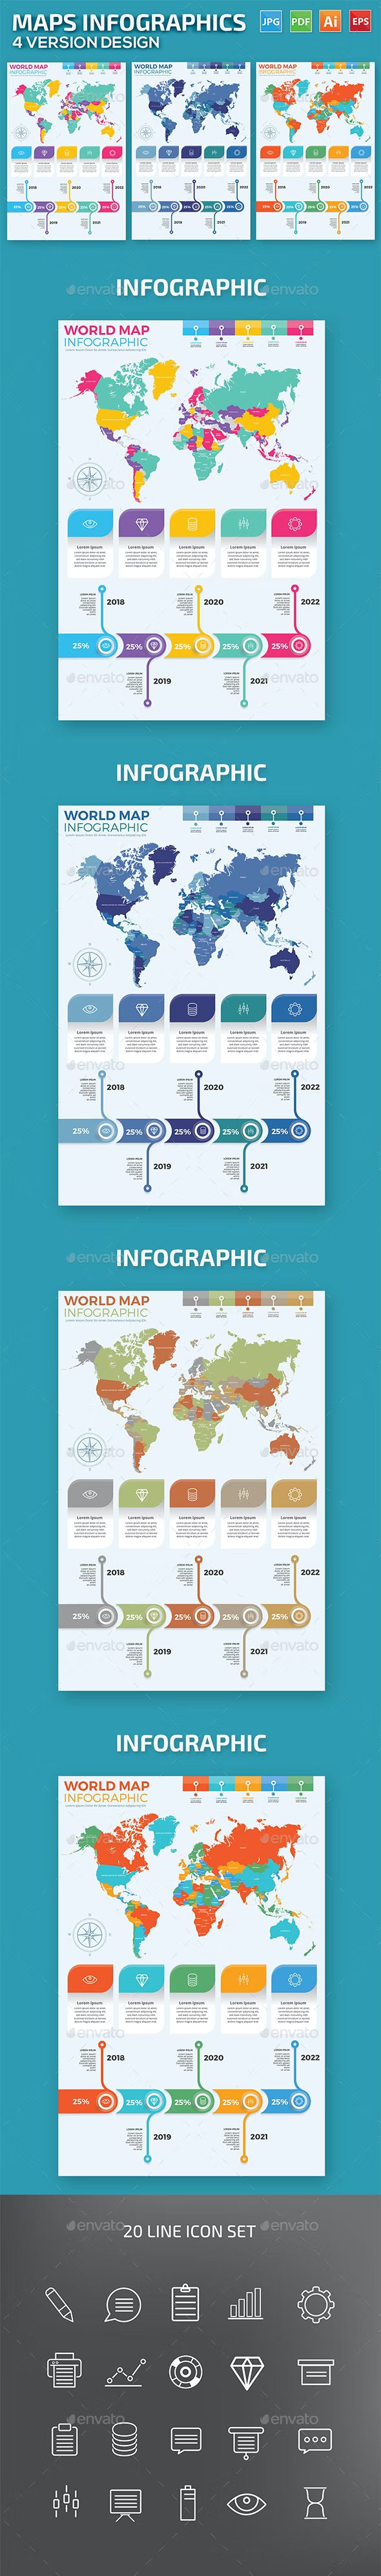 maps infographics design 843